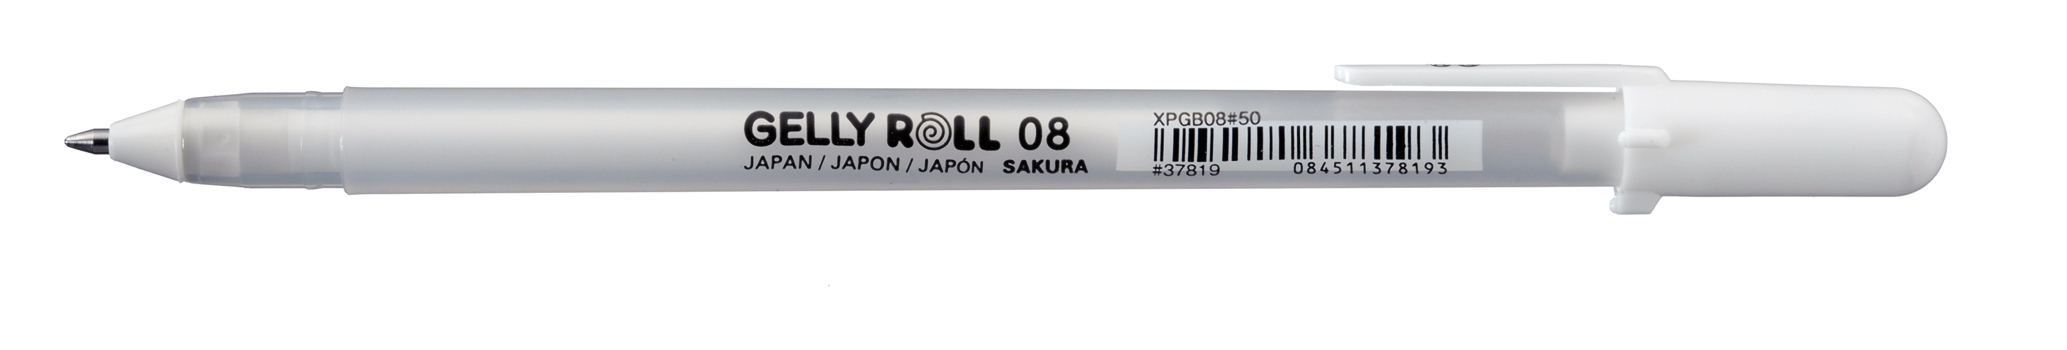 SAKURA Gelly Roll 0.4mm XPGB50 Basic weiss